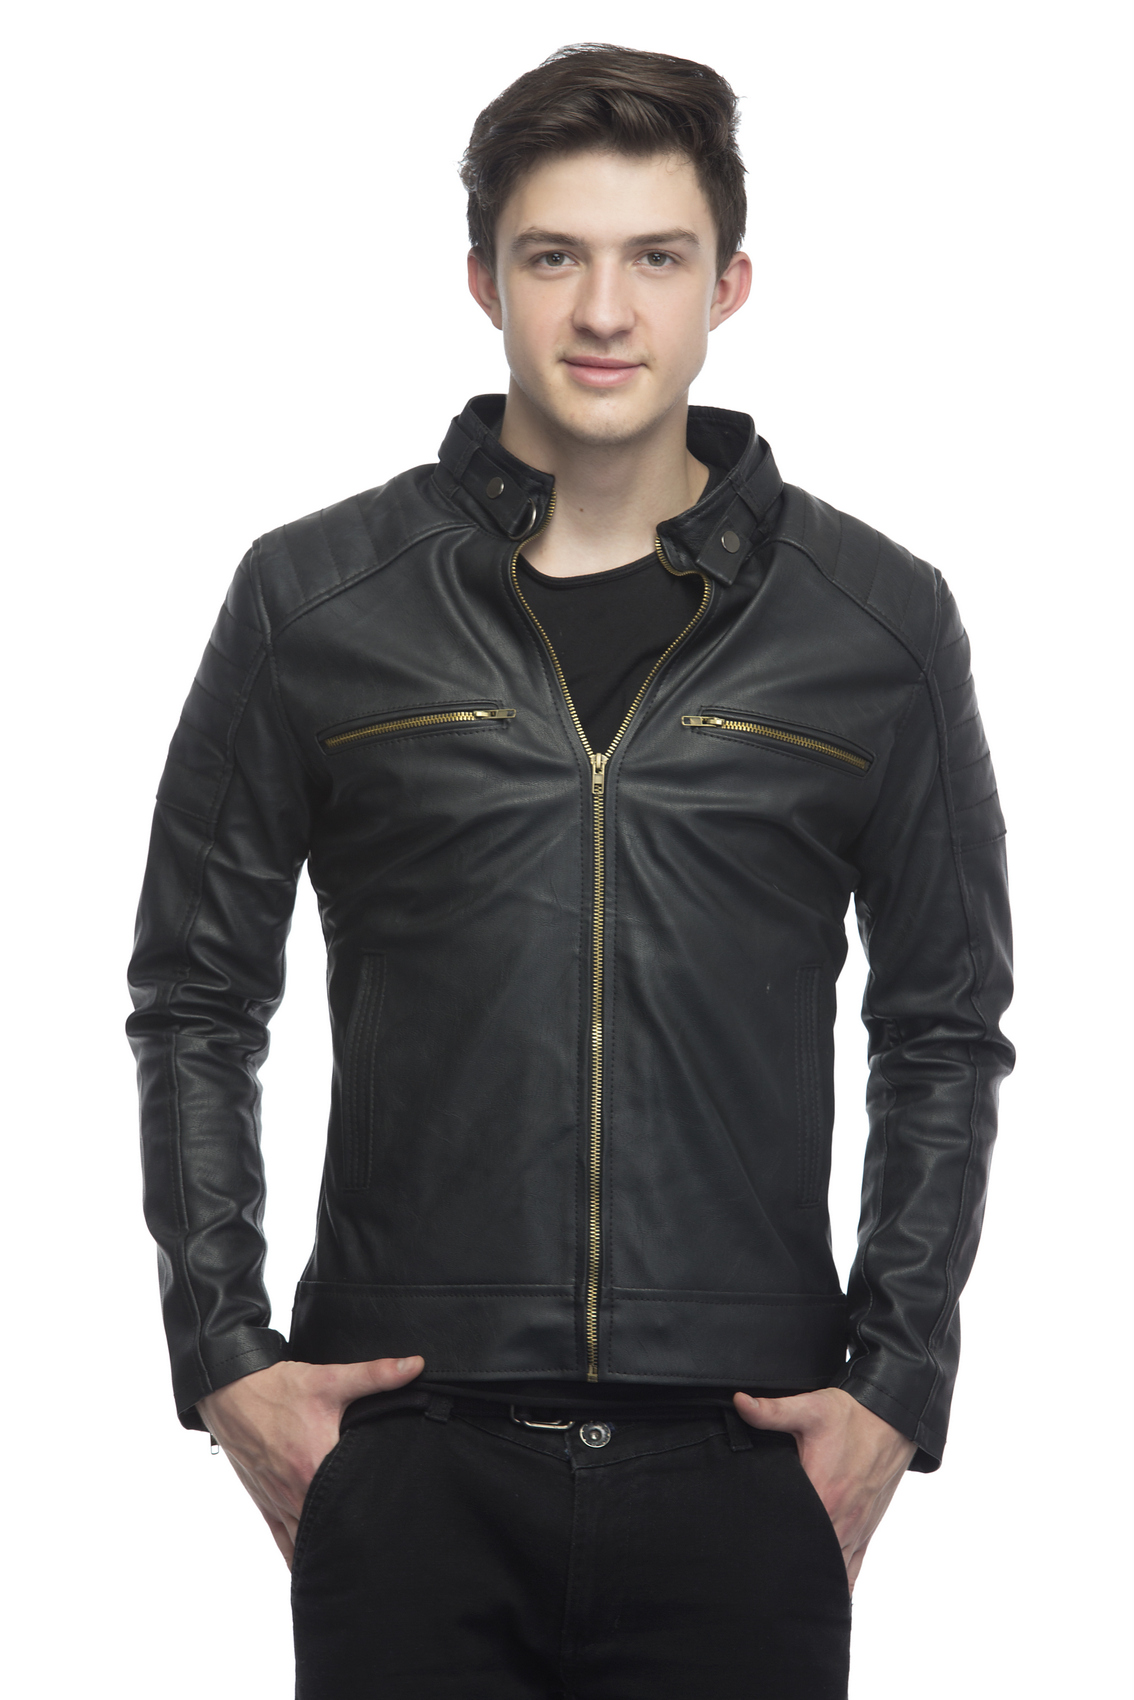 Buy Emblazon Men's Black Casual Jacket Online @ ₹1302 from ShopClues